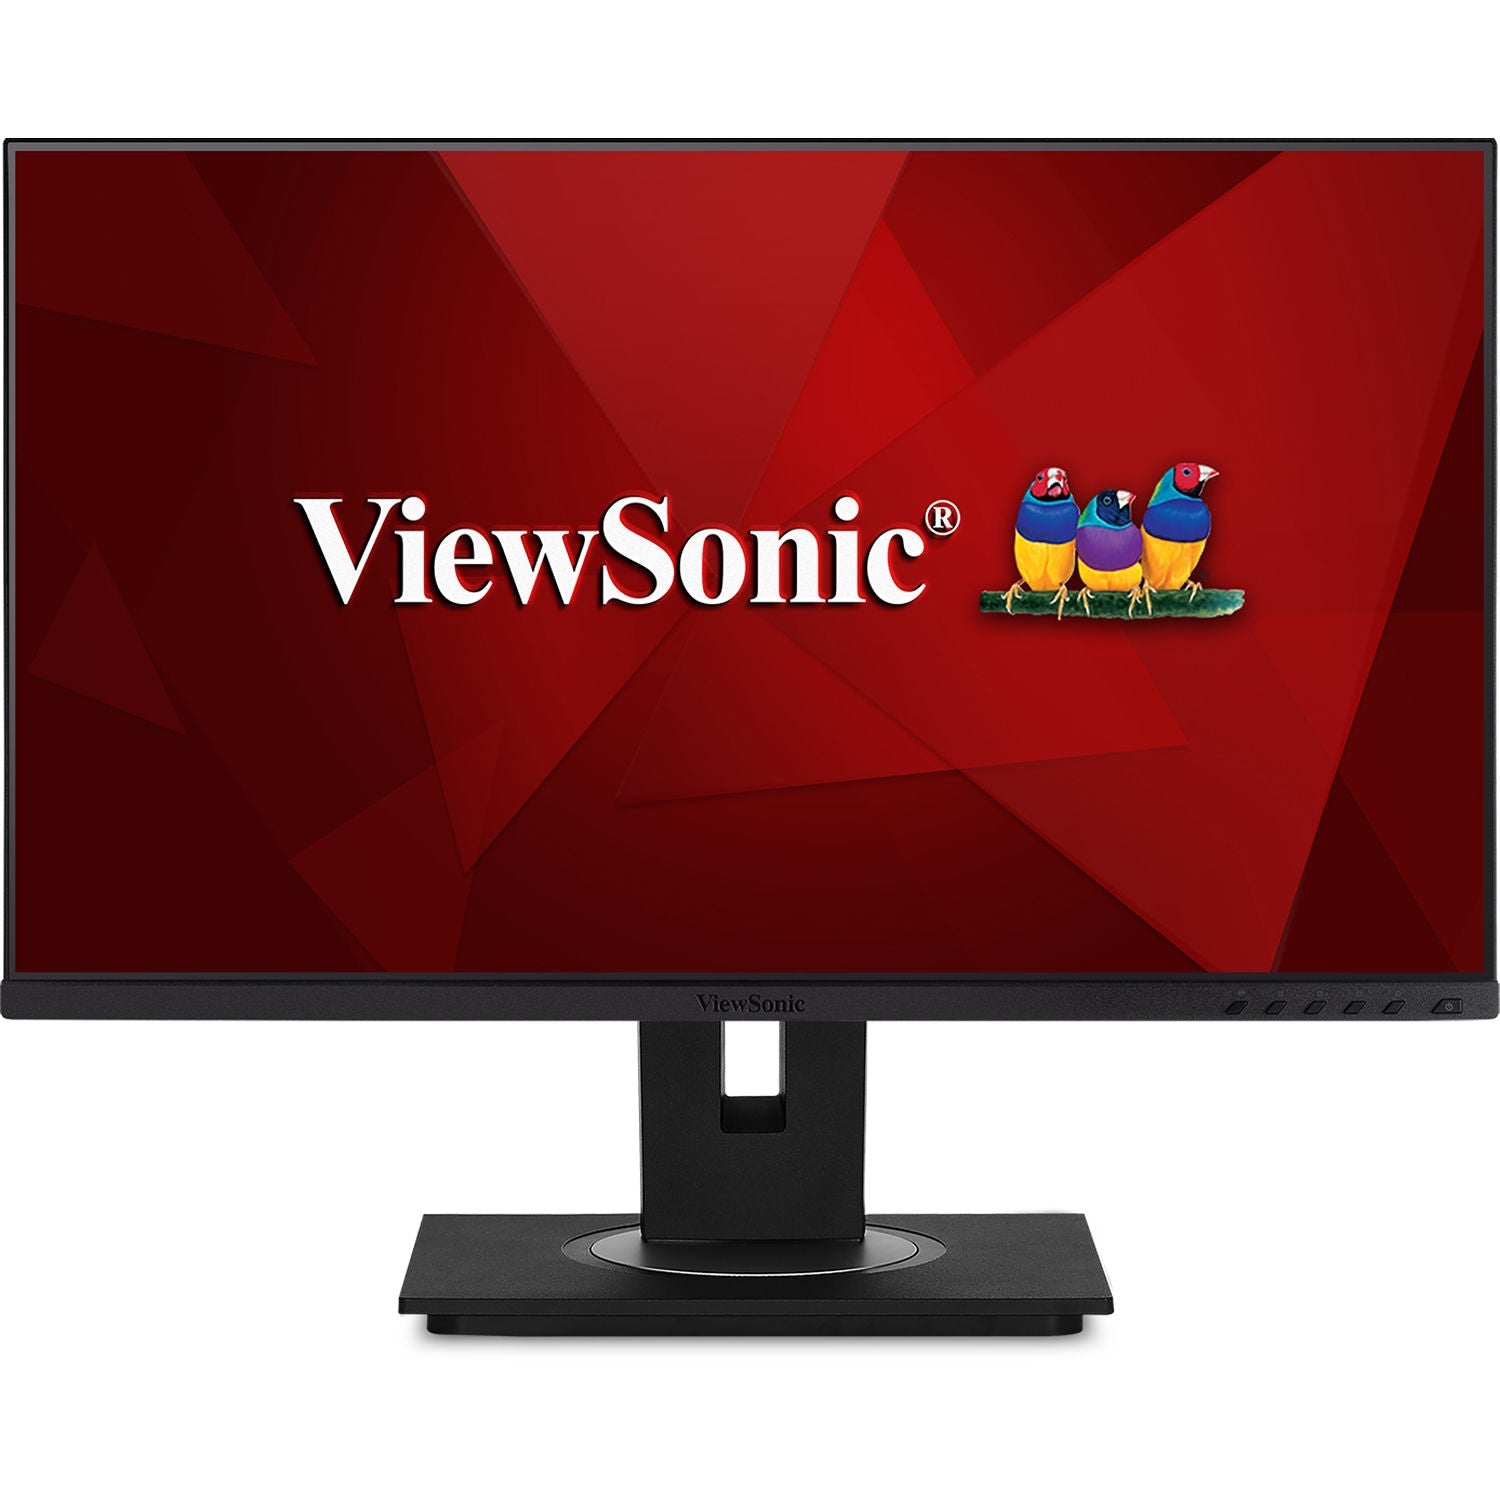 ViewSonic VG2755-2K-R 27" 16:9 IPS Monitor -Certified Refurbished